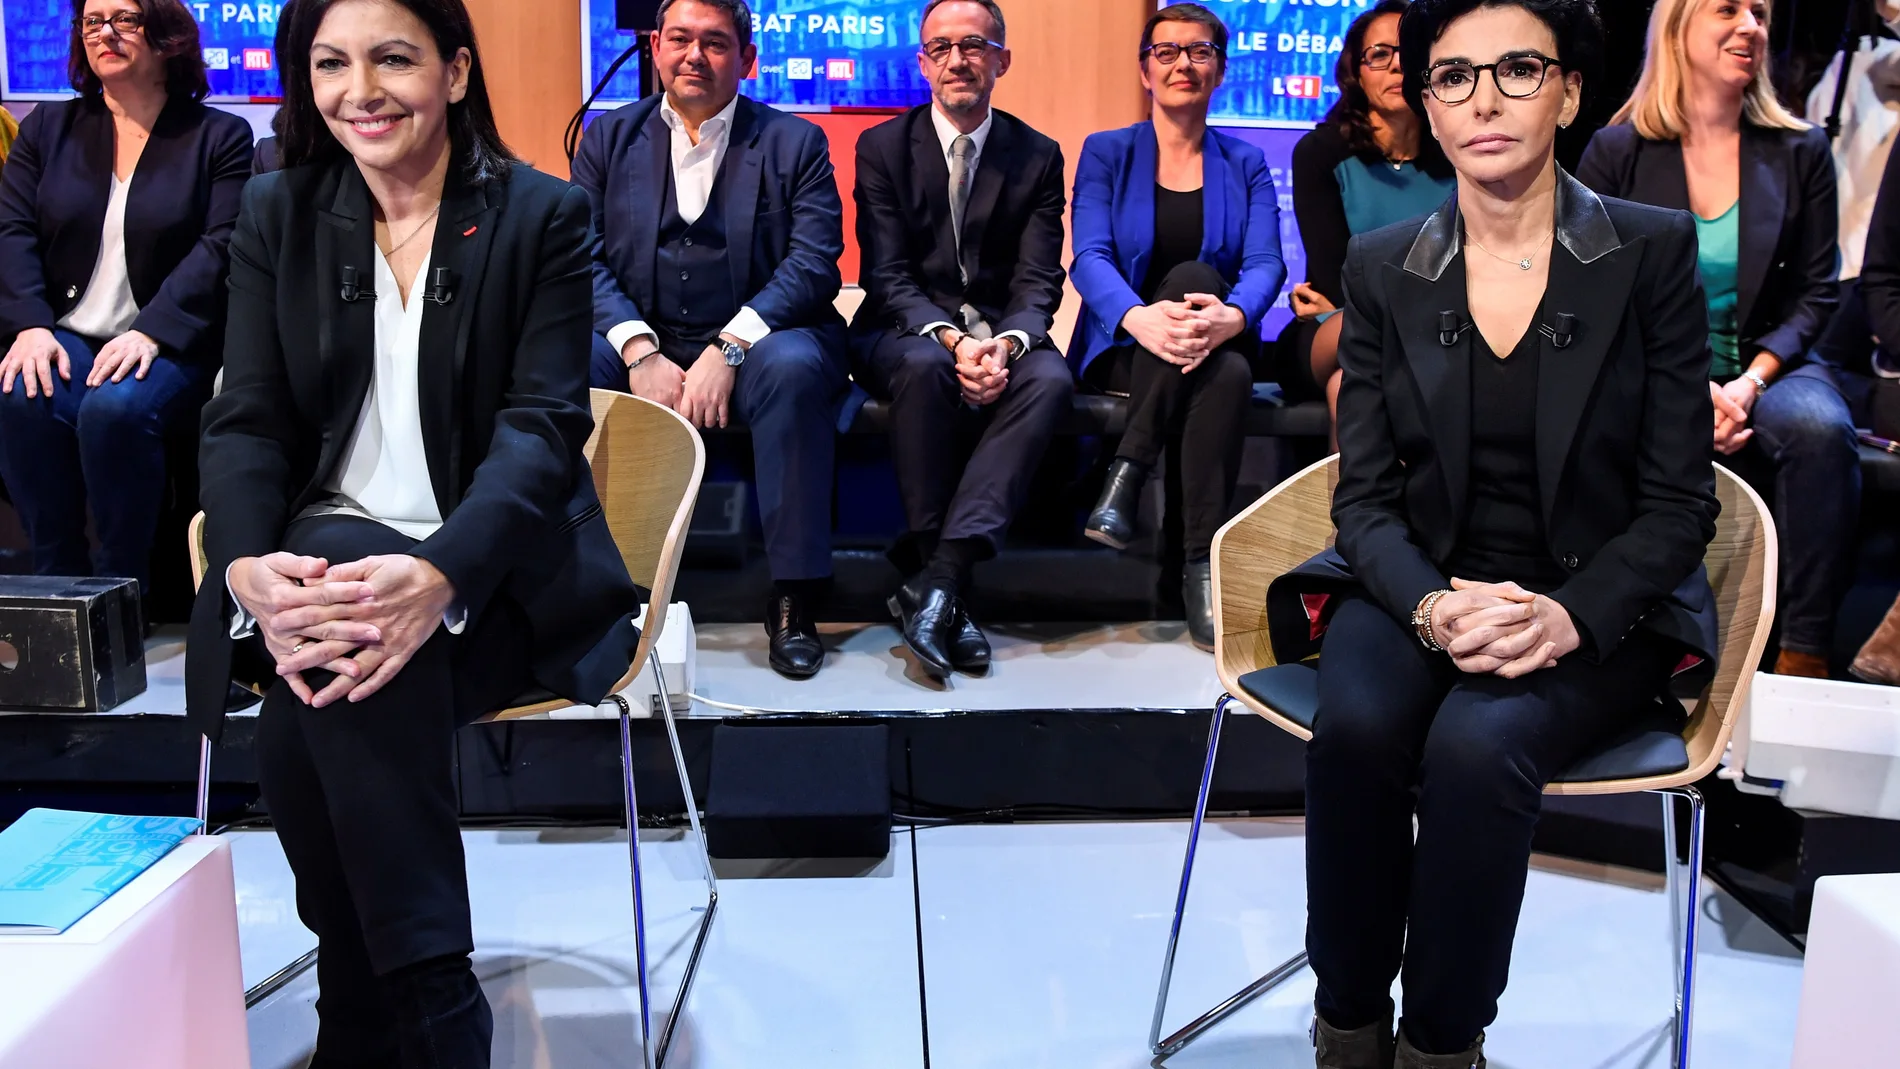 Paris city mayor candidates debate